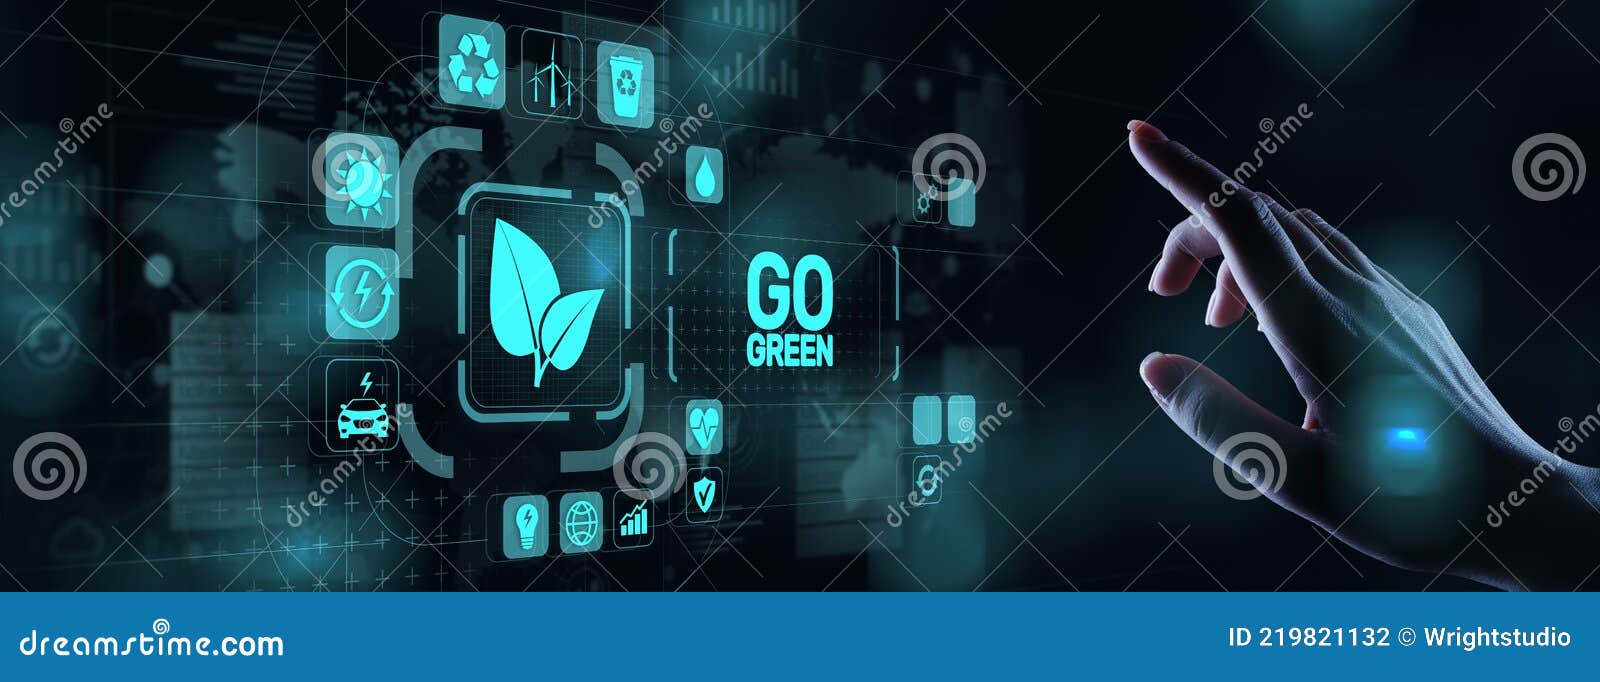 go green eco technology ecology earth planet saving alternative energy. button on virtual screen